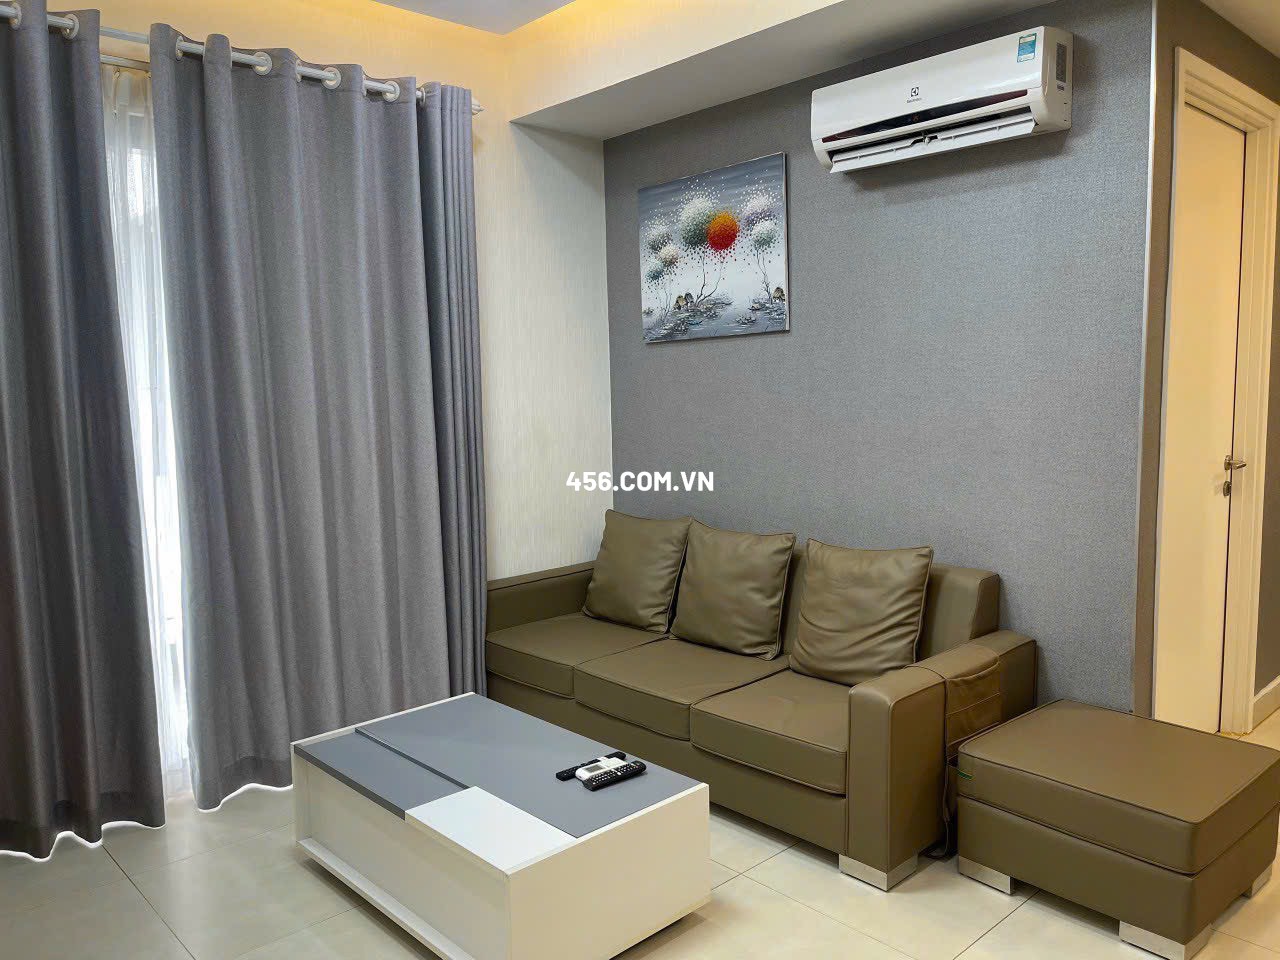 1 Bedrooms Masteri Thao Dien Apartment For...